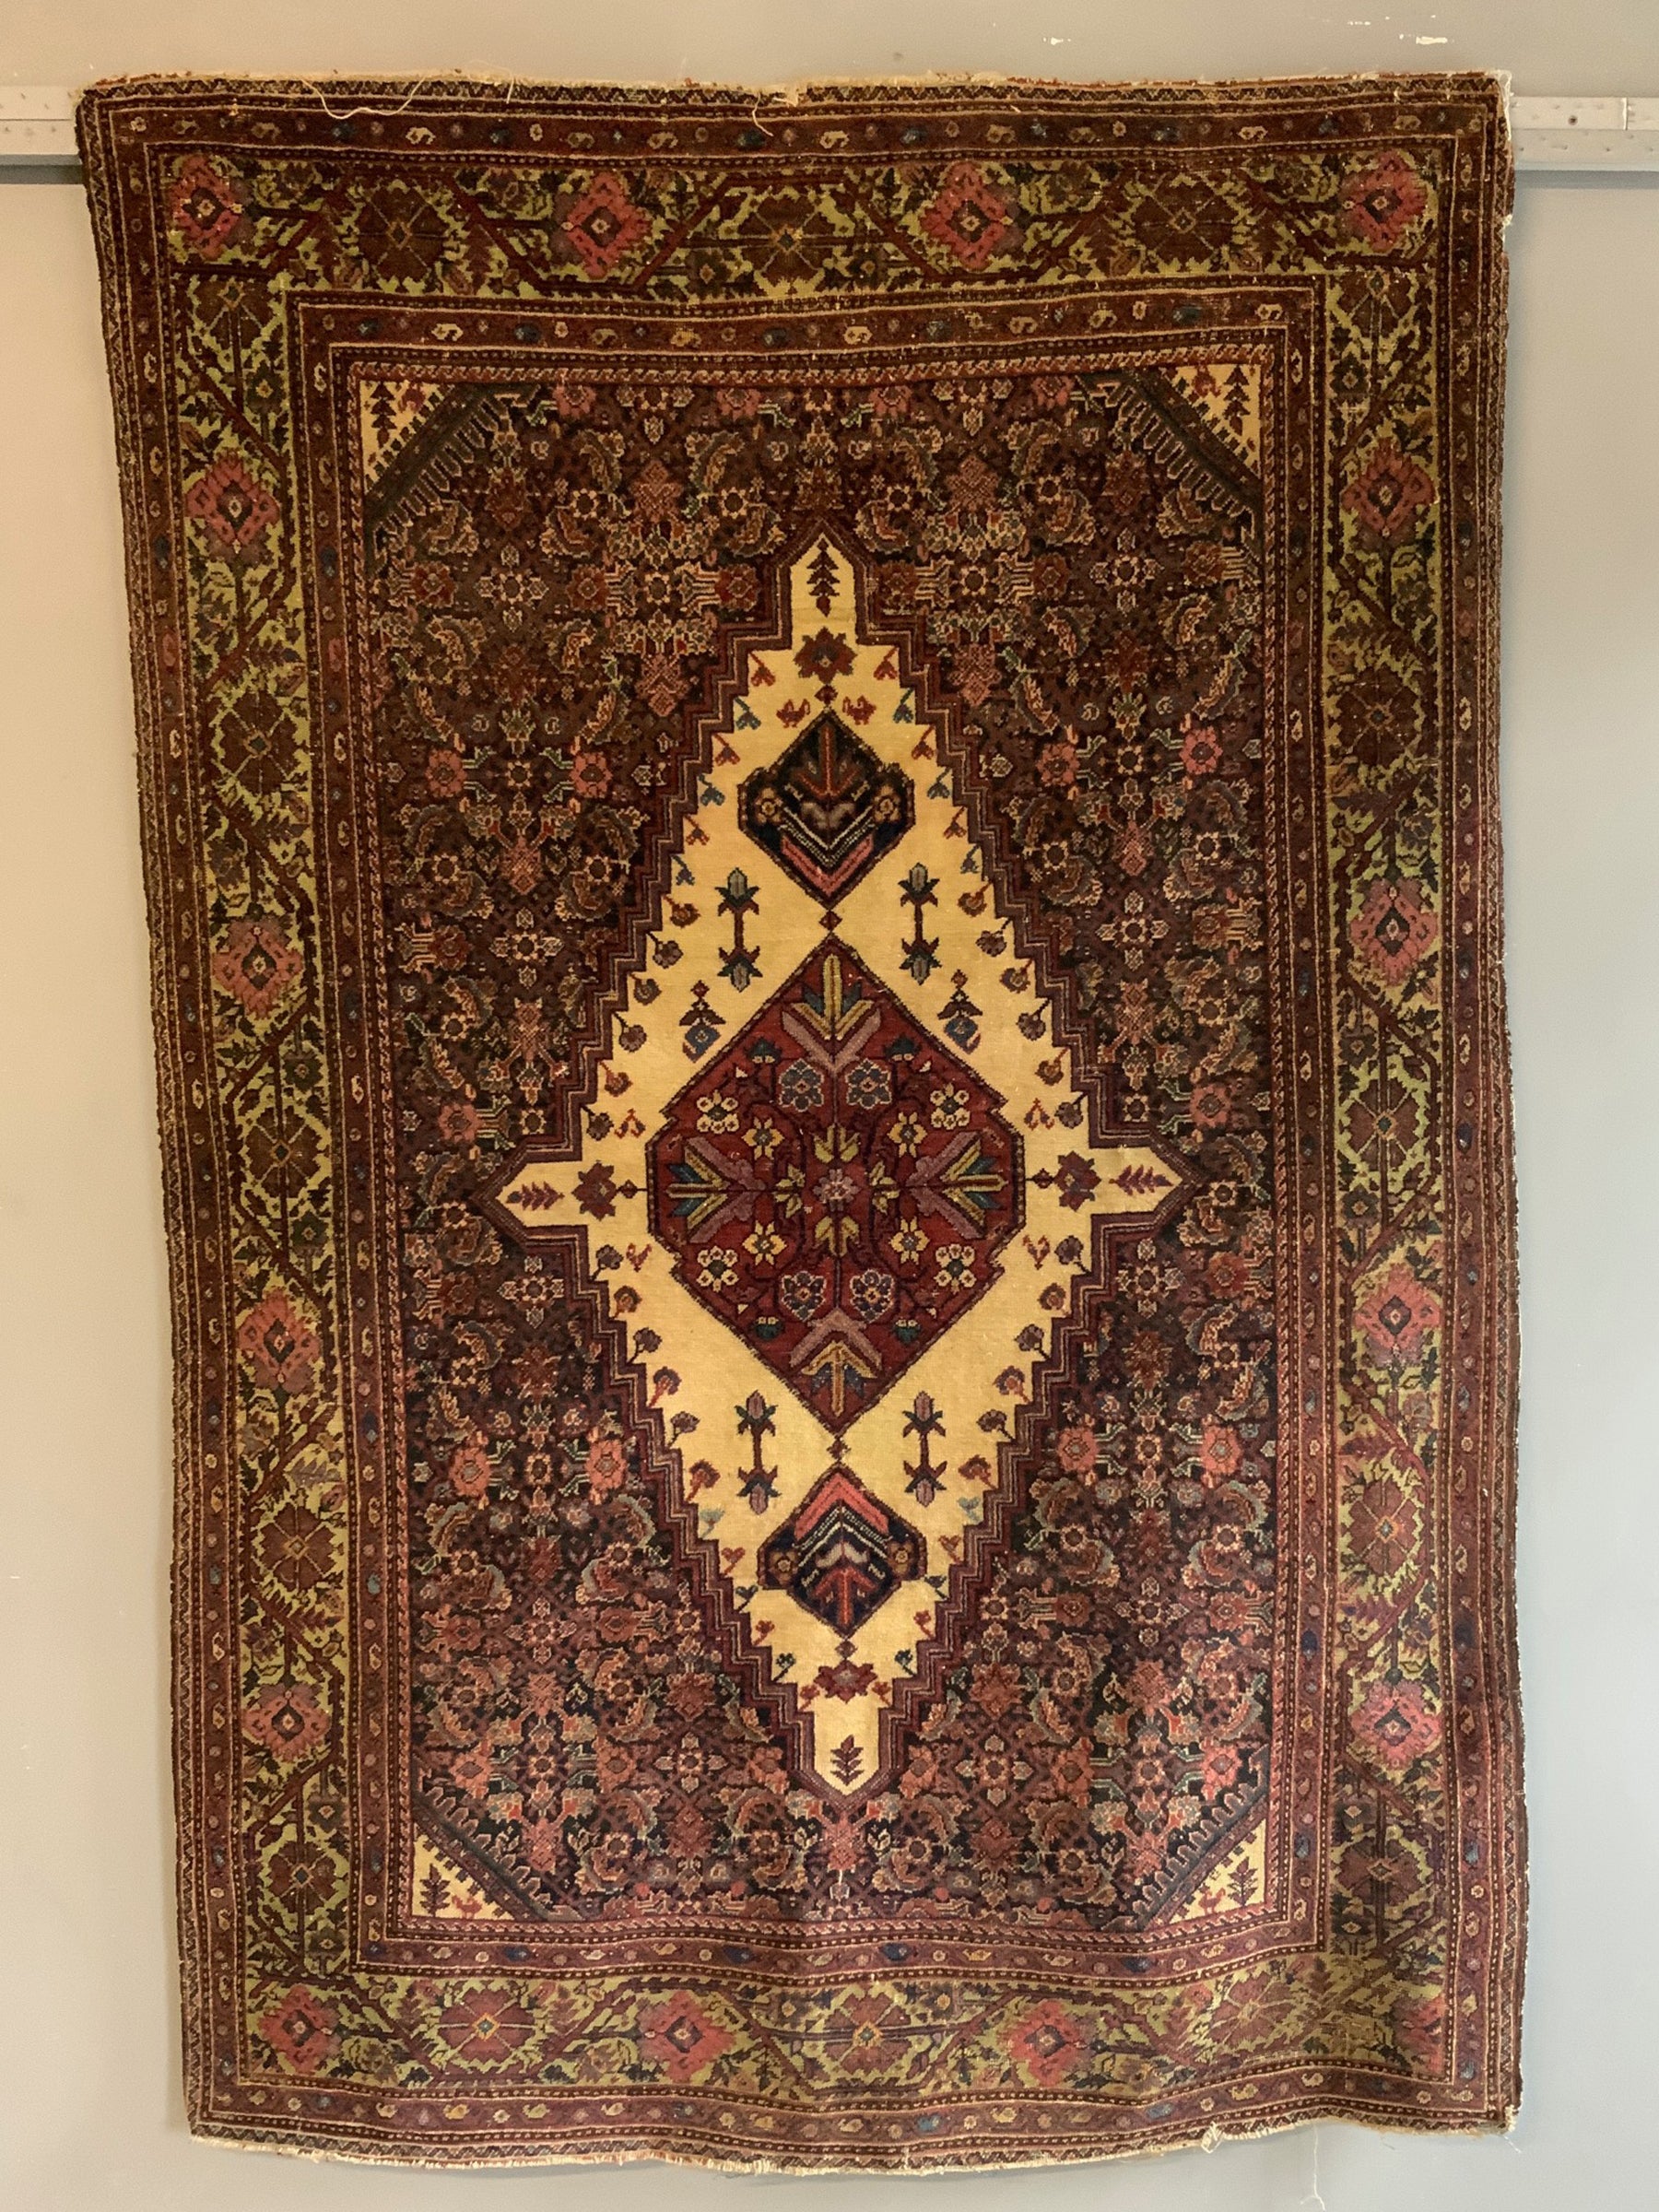 Fereghan antique rug (180 x 120cm)